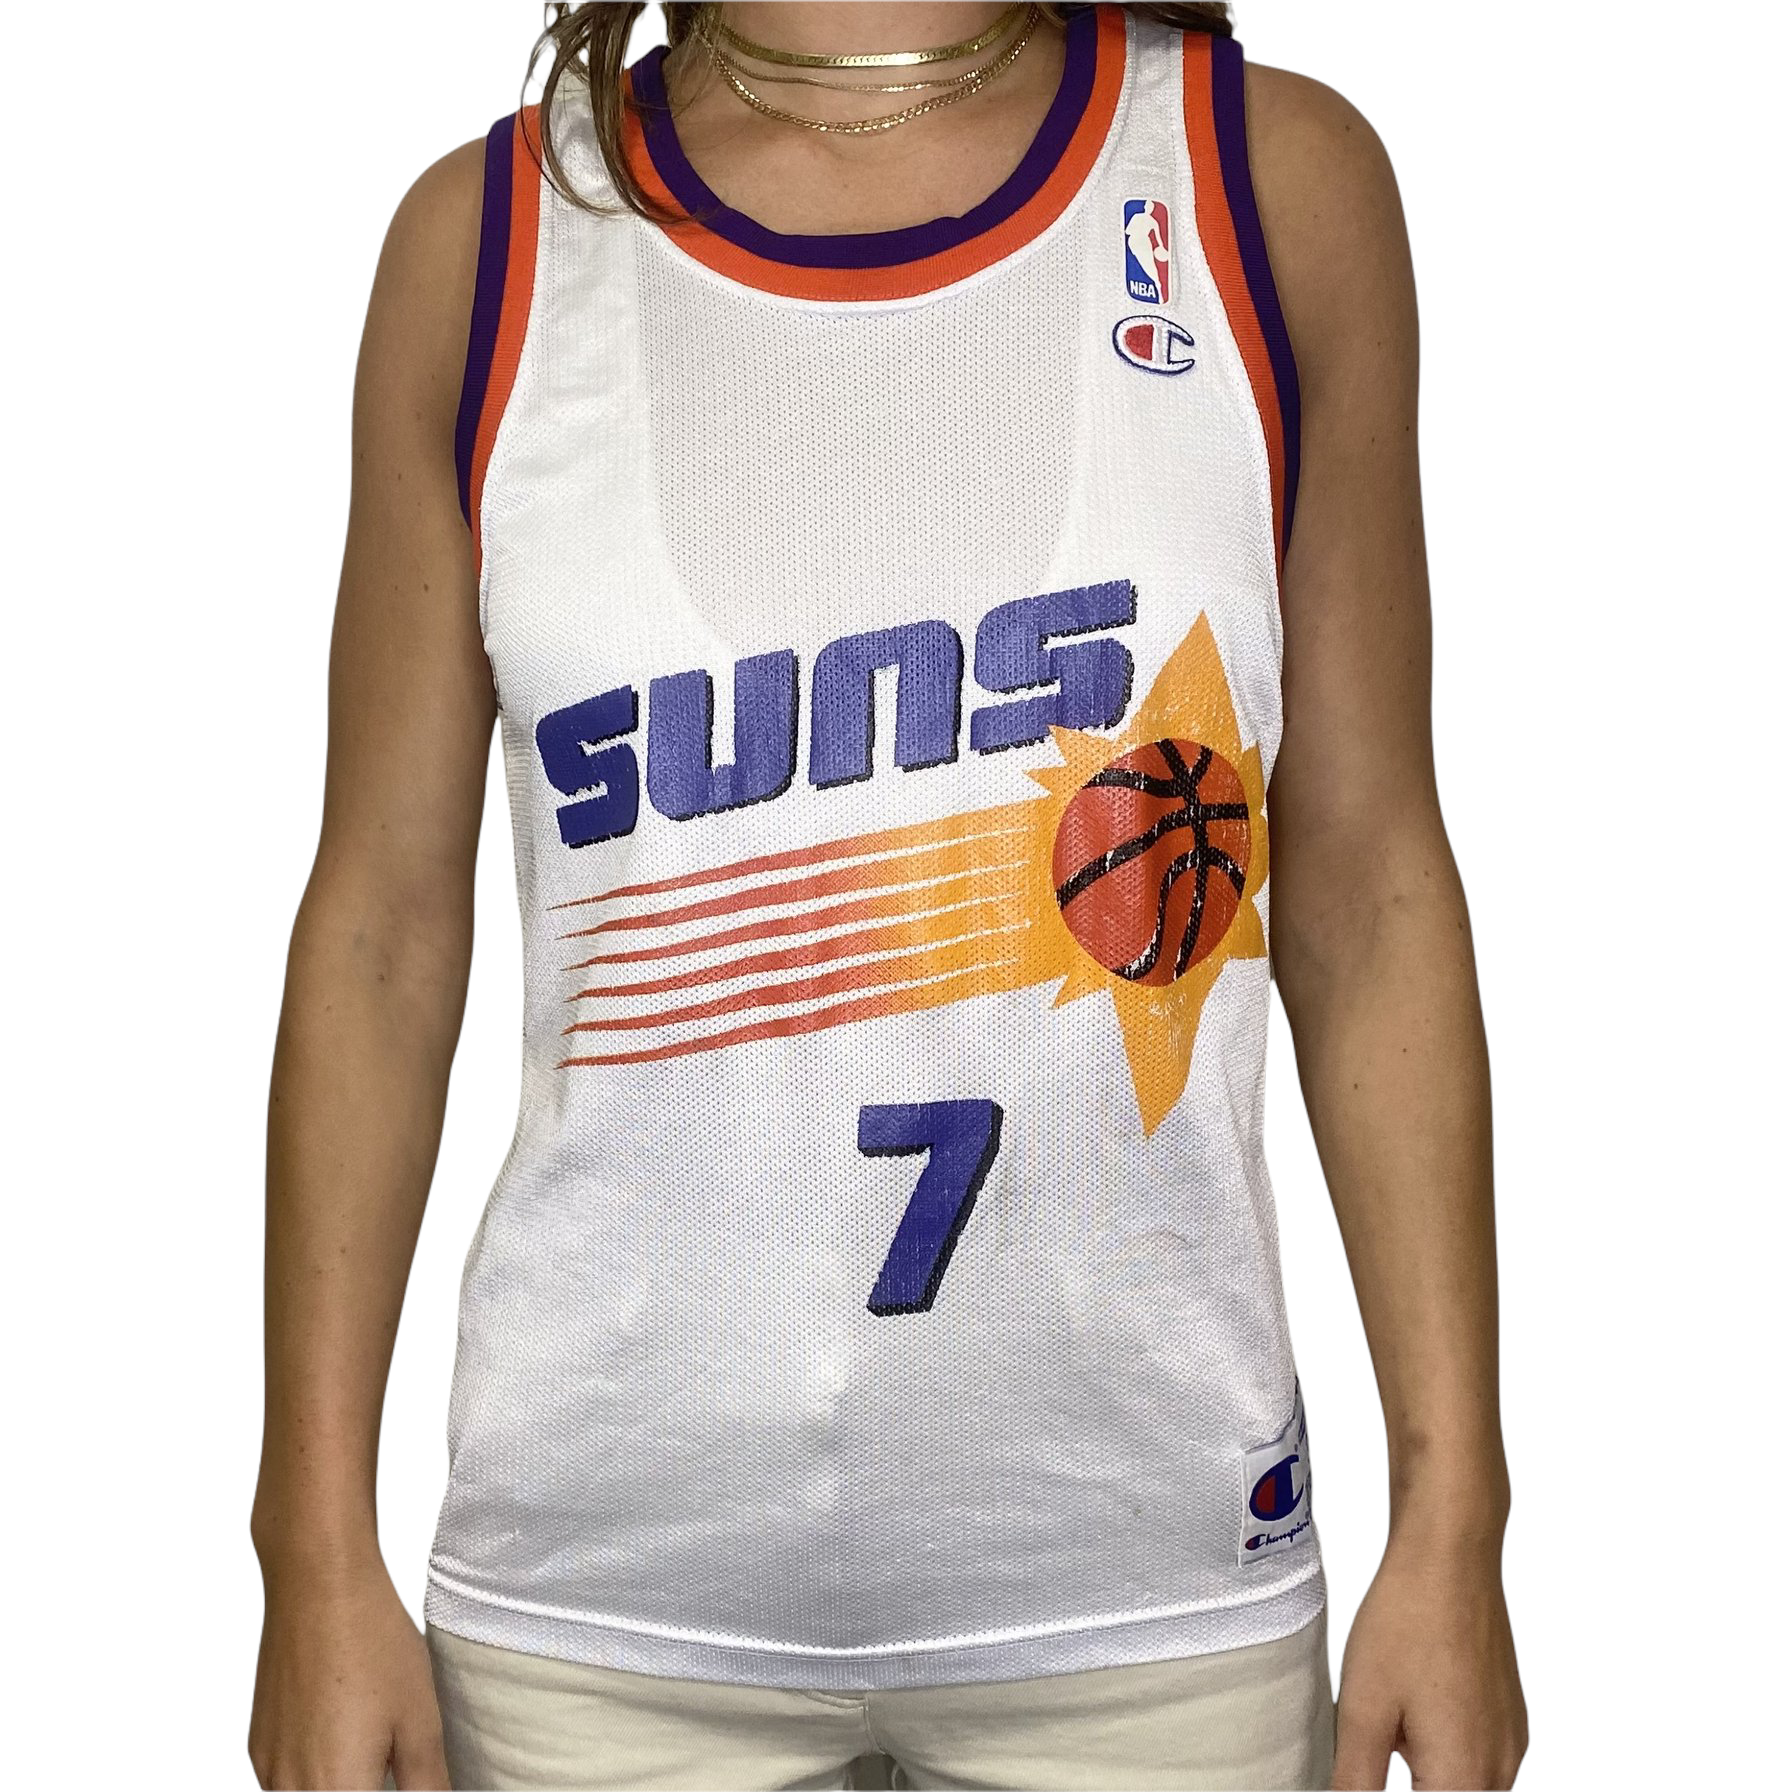 Phoenix Suns Throwback Jersey -Charles Barkley